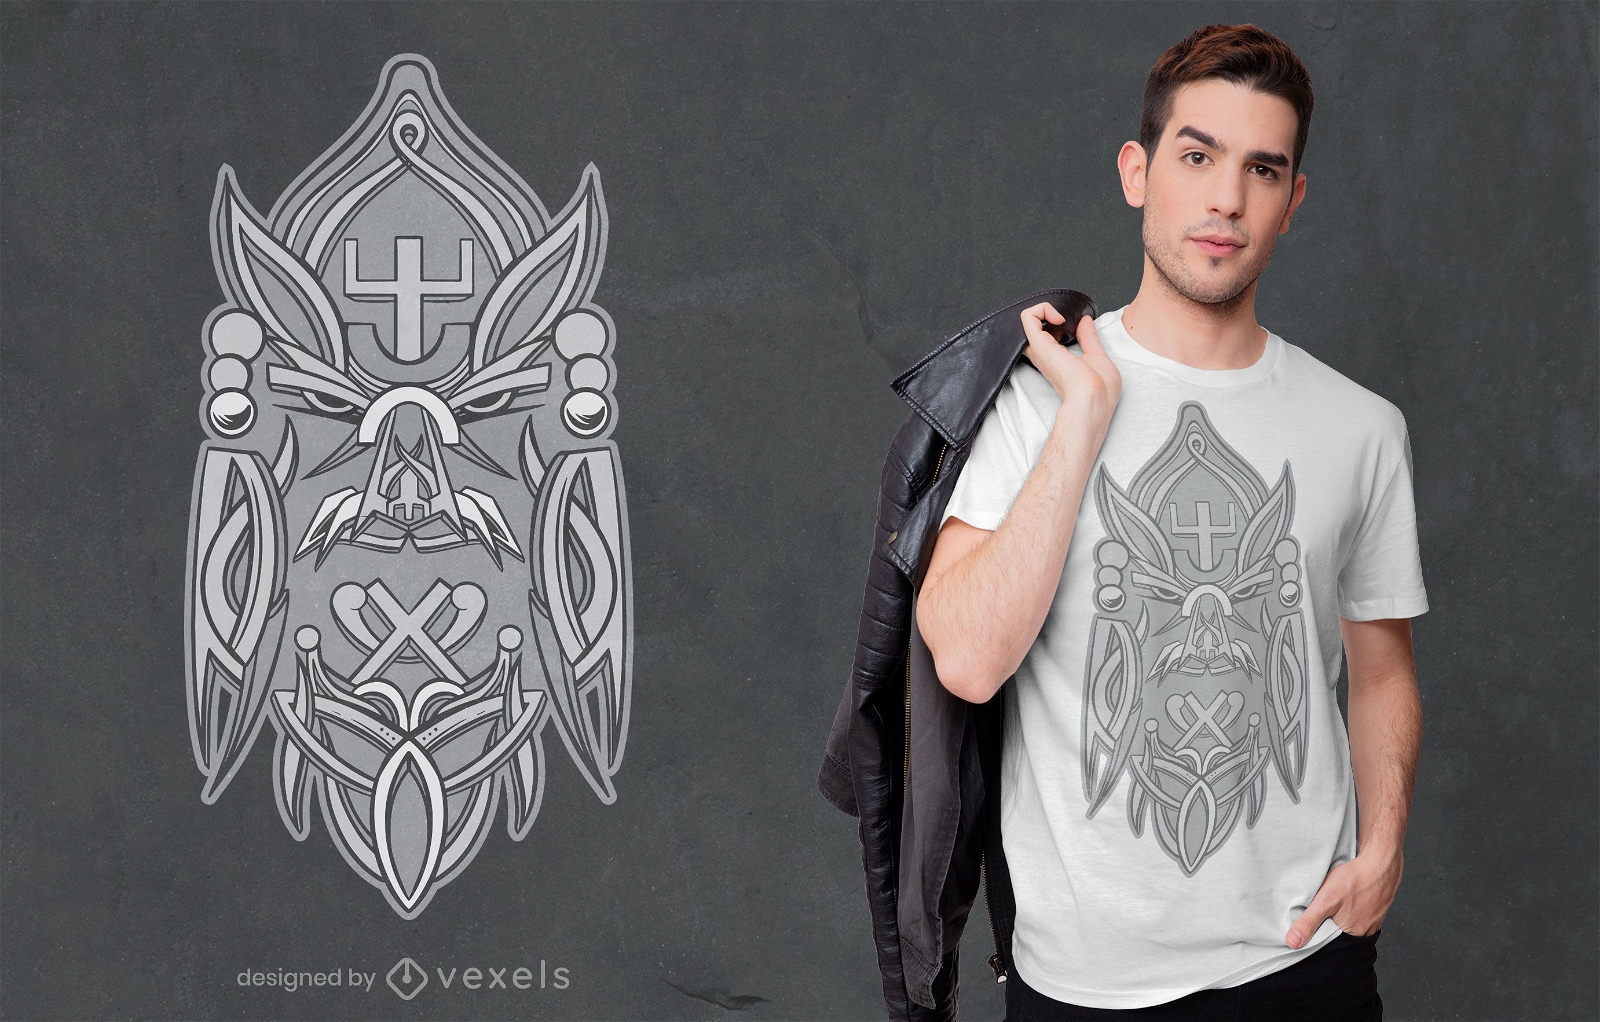 Odin rune t-shirt design